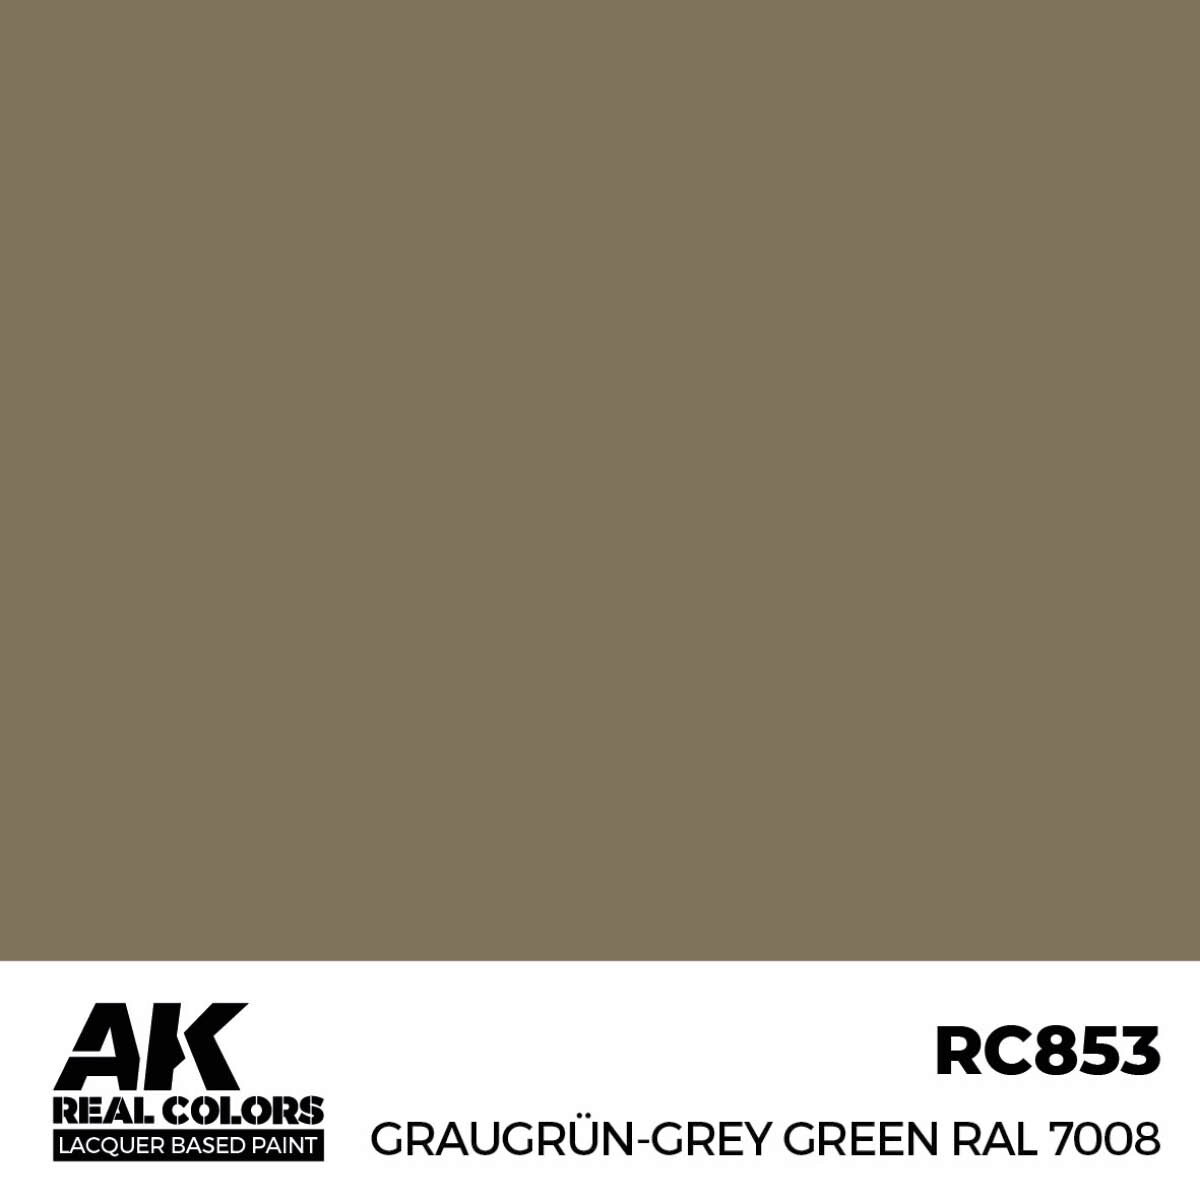 AK RC853 Real Colors Graugrün-Grey Green RAL 7008 17 ml.